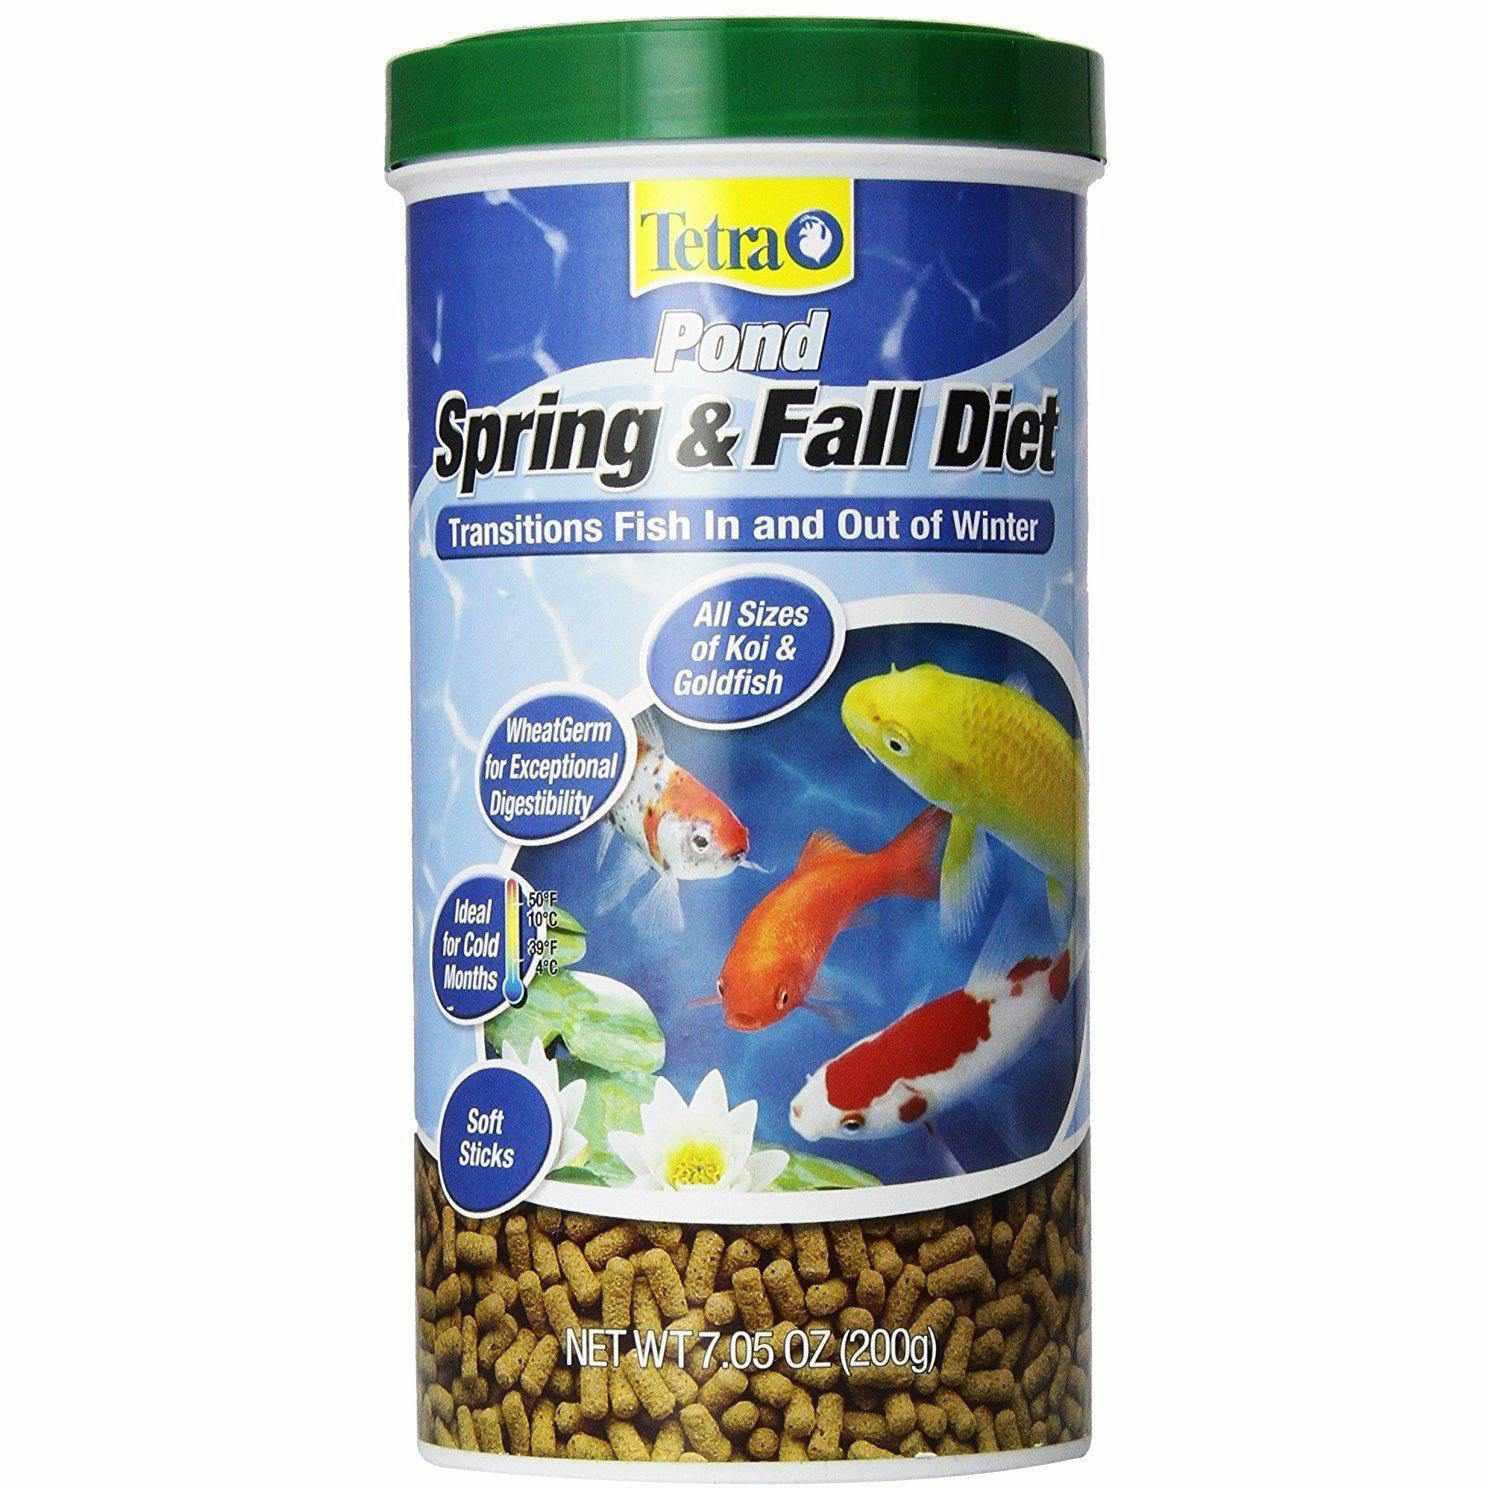 TetraPond Spring & Fall Diet Fish Food - Play It Koi